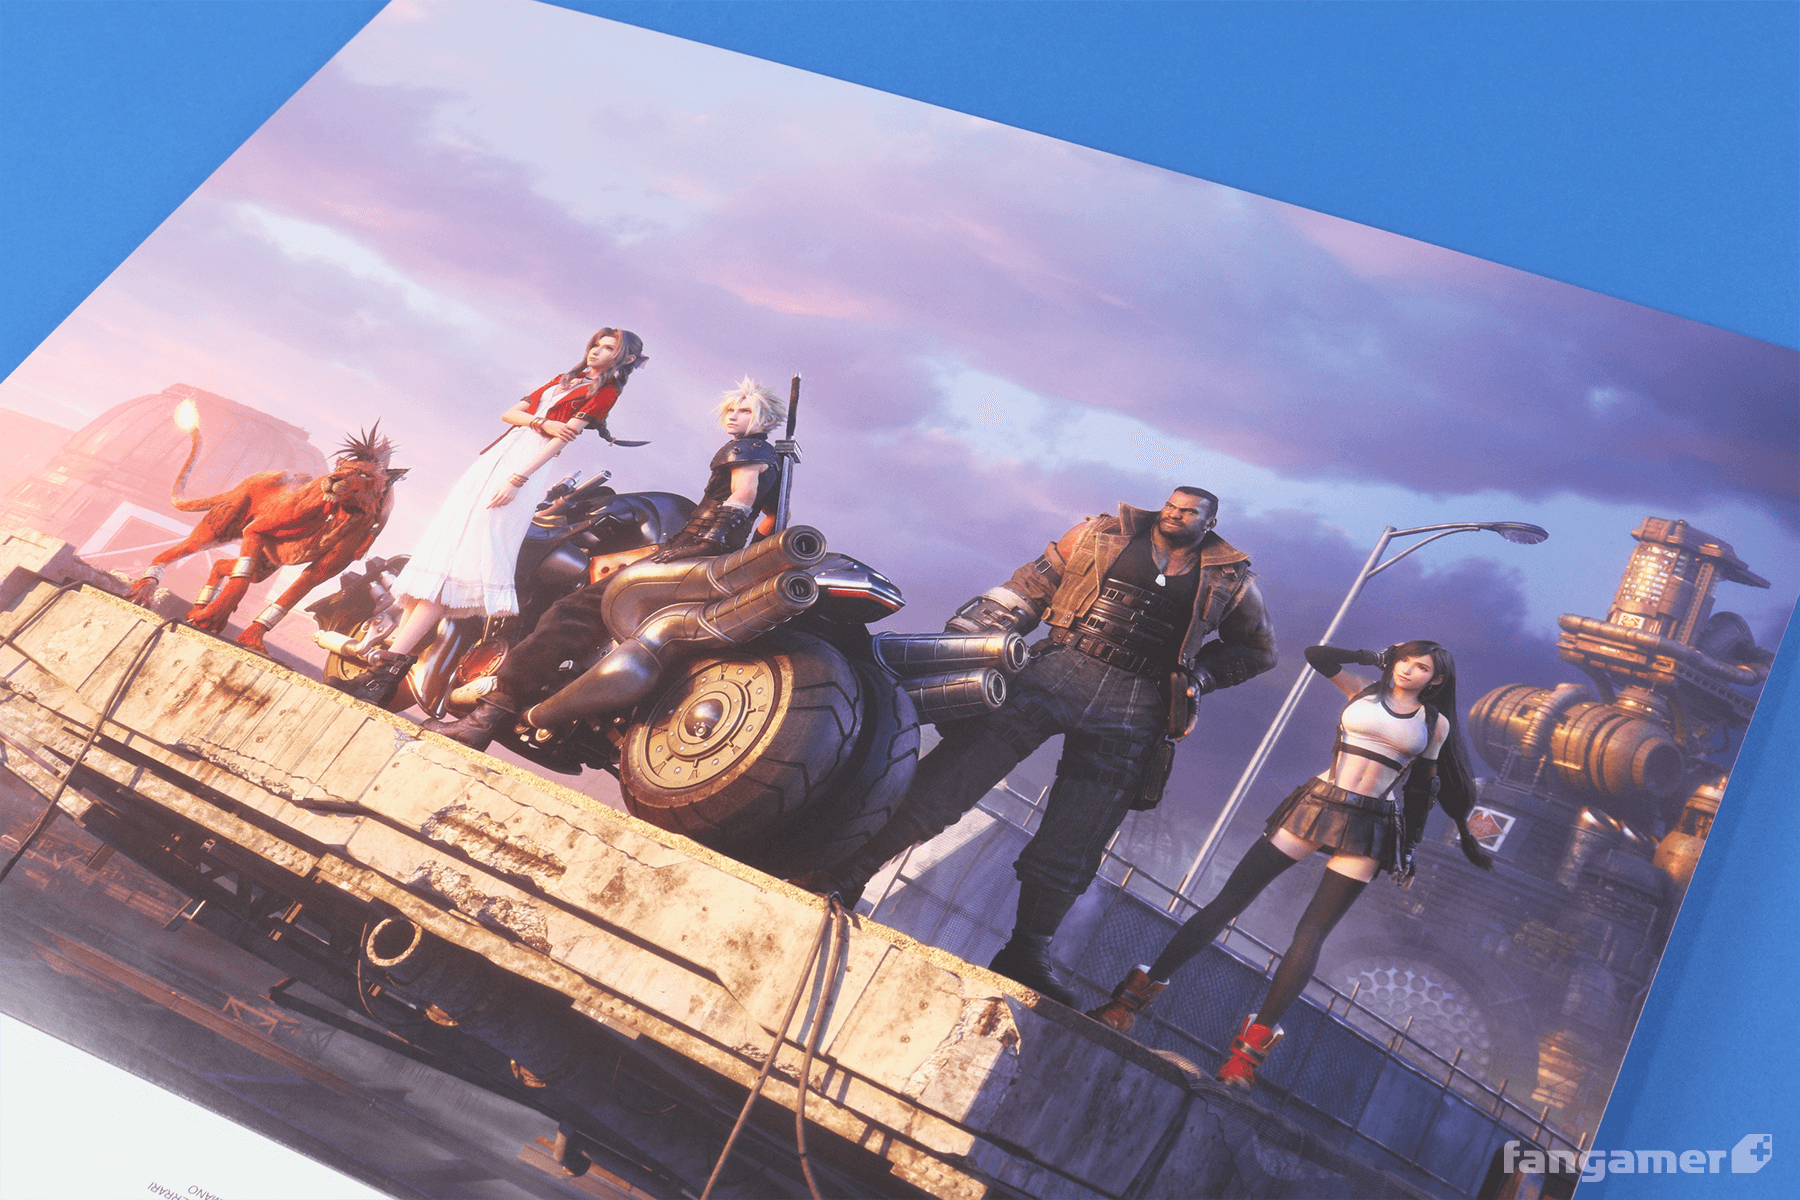 Final Fantasy VII Remake Limited Edition Fine Art Print FF7 Poster